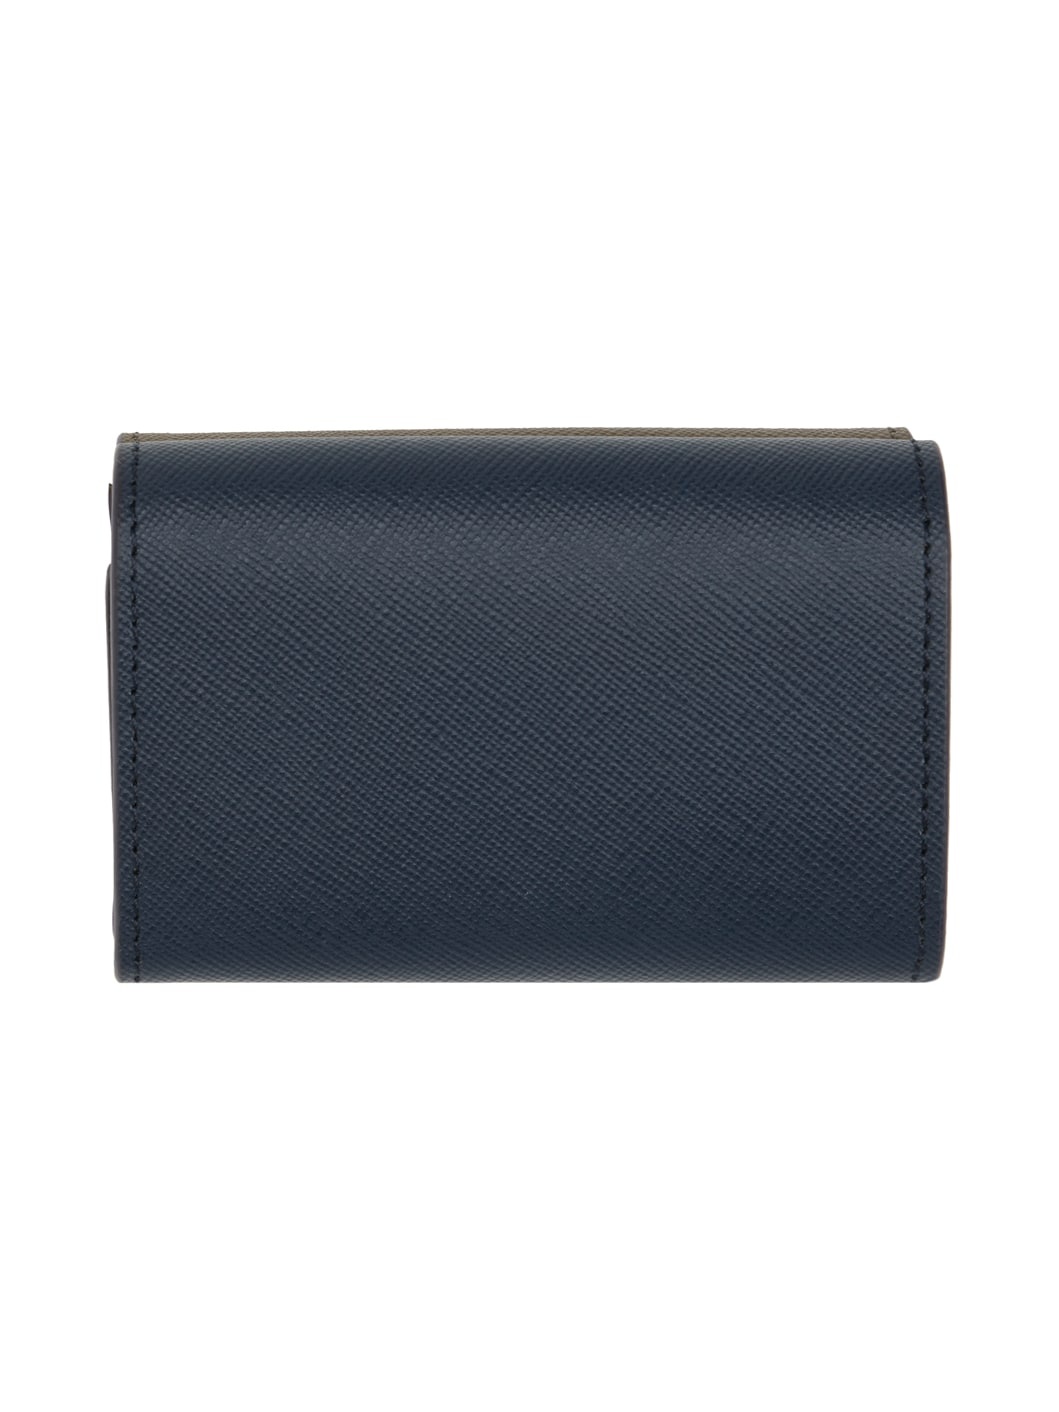 Khaki & Navy Saffiano Leather Trifold Wallet - 2